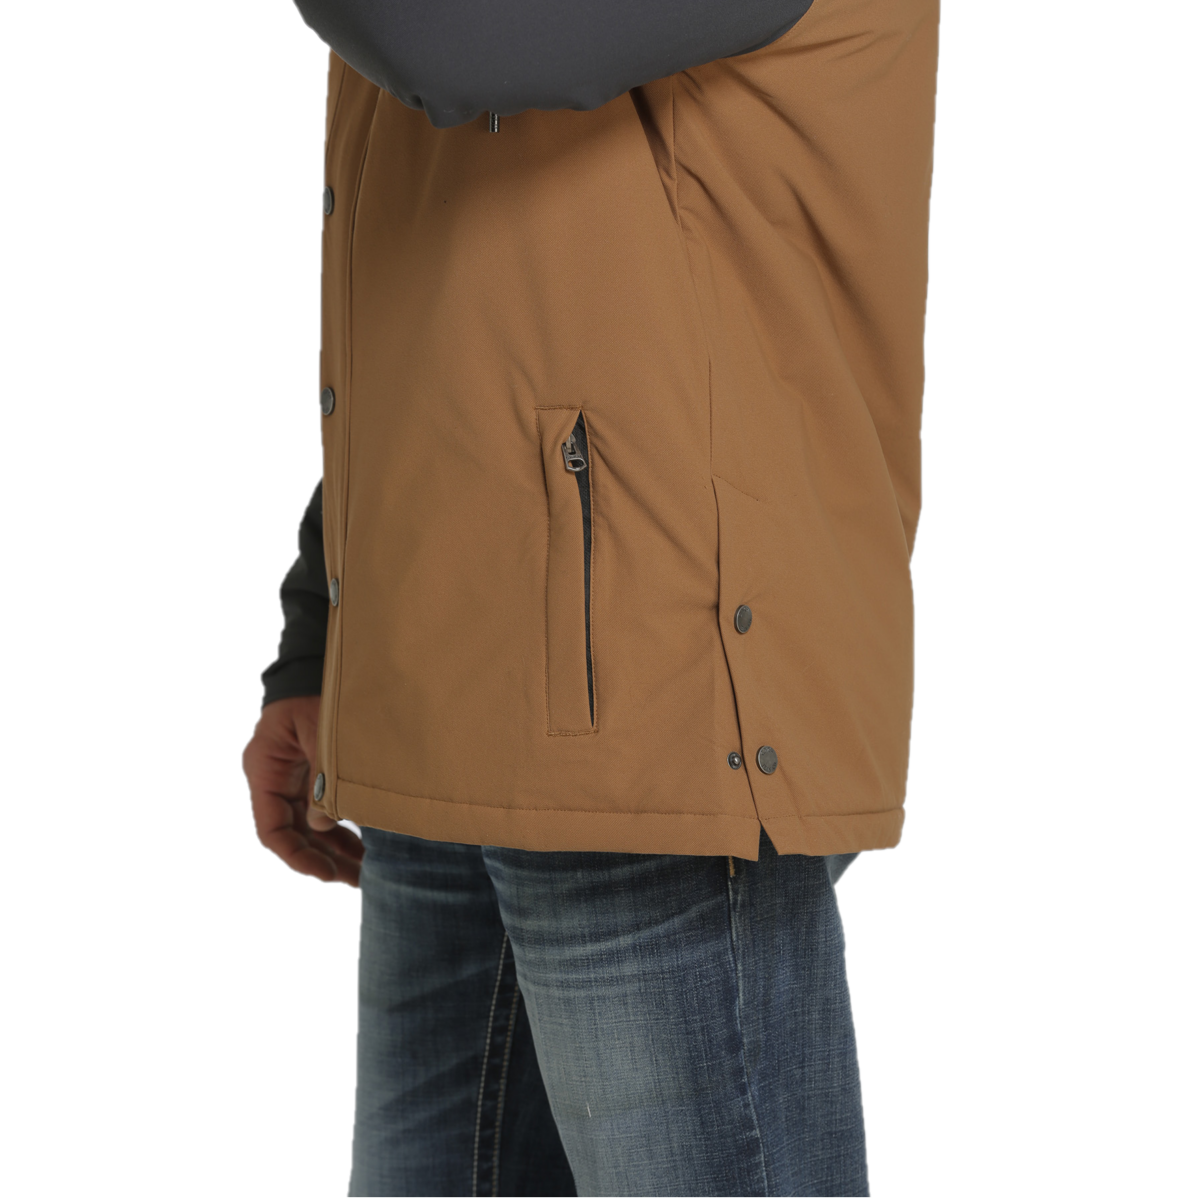 Cinch® Men's Brown Lined Color Block Ski Coat MWJ1574001